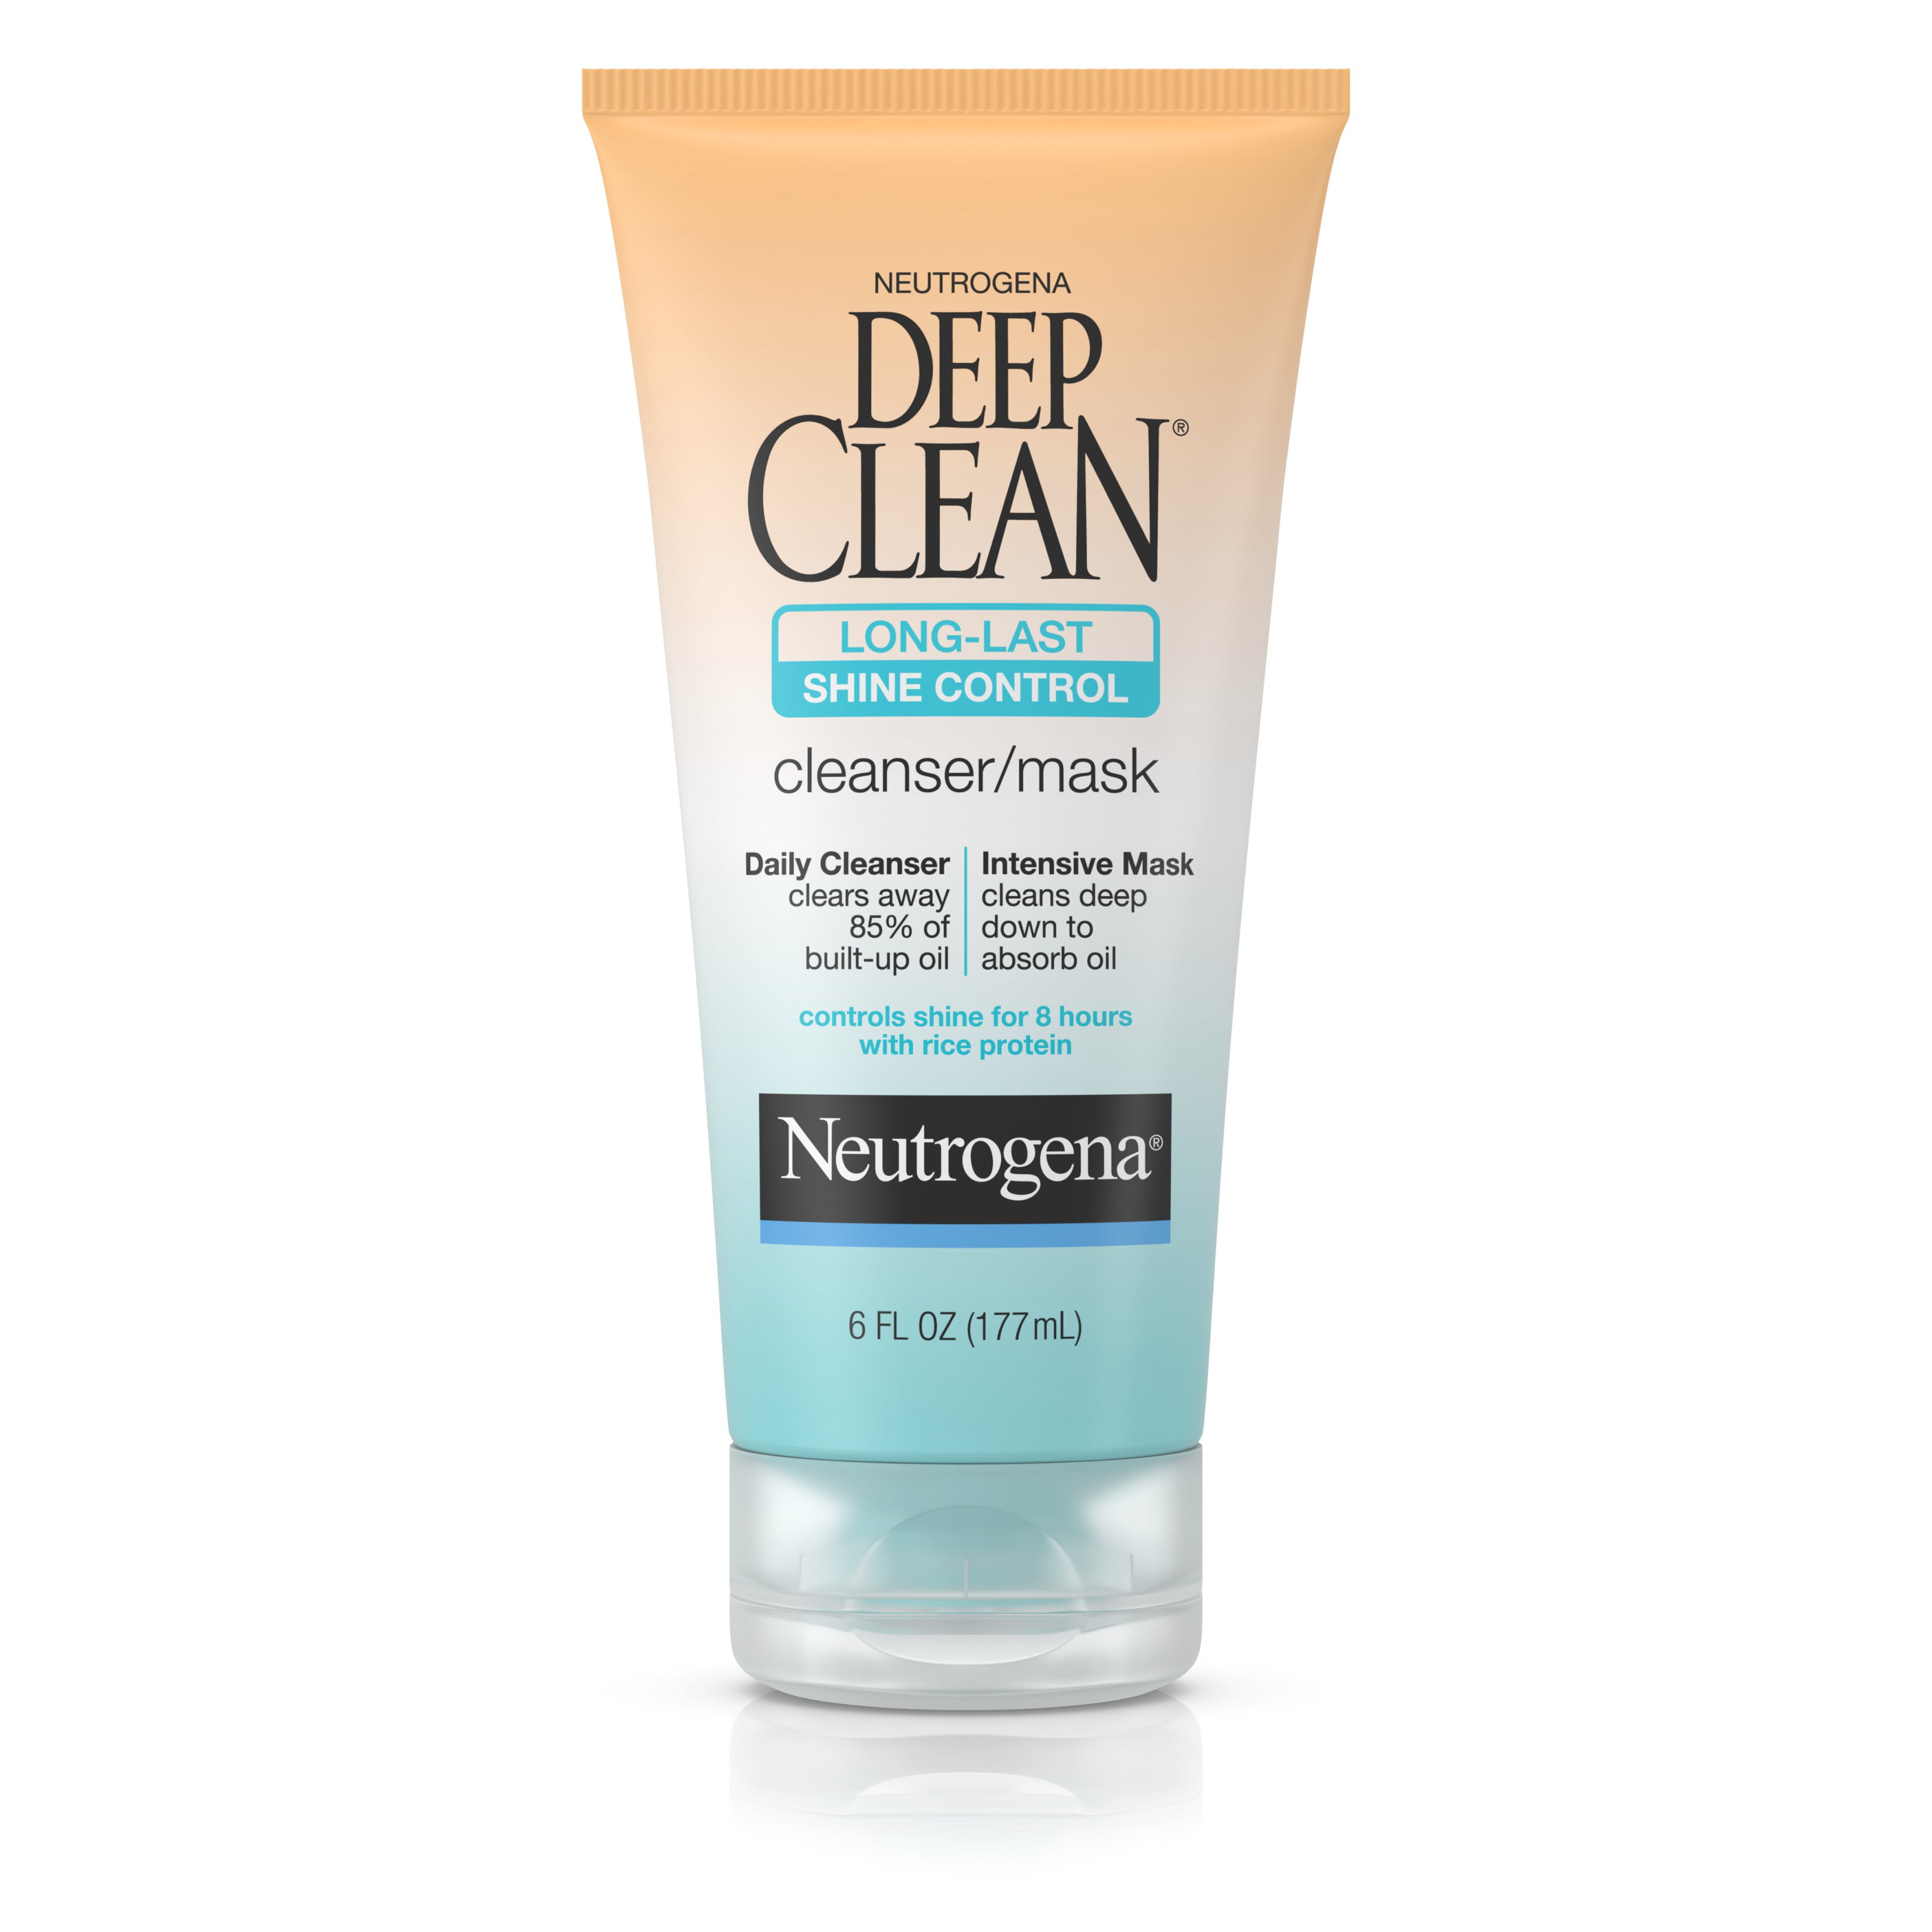 cleanser facial Neutrogena clean deep